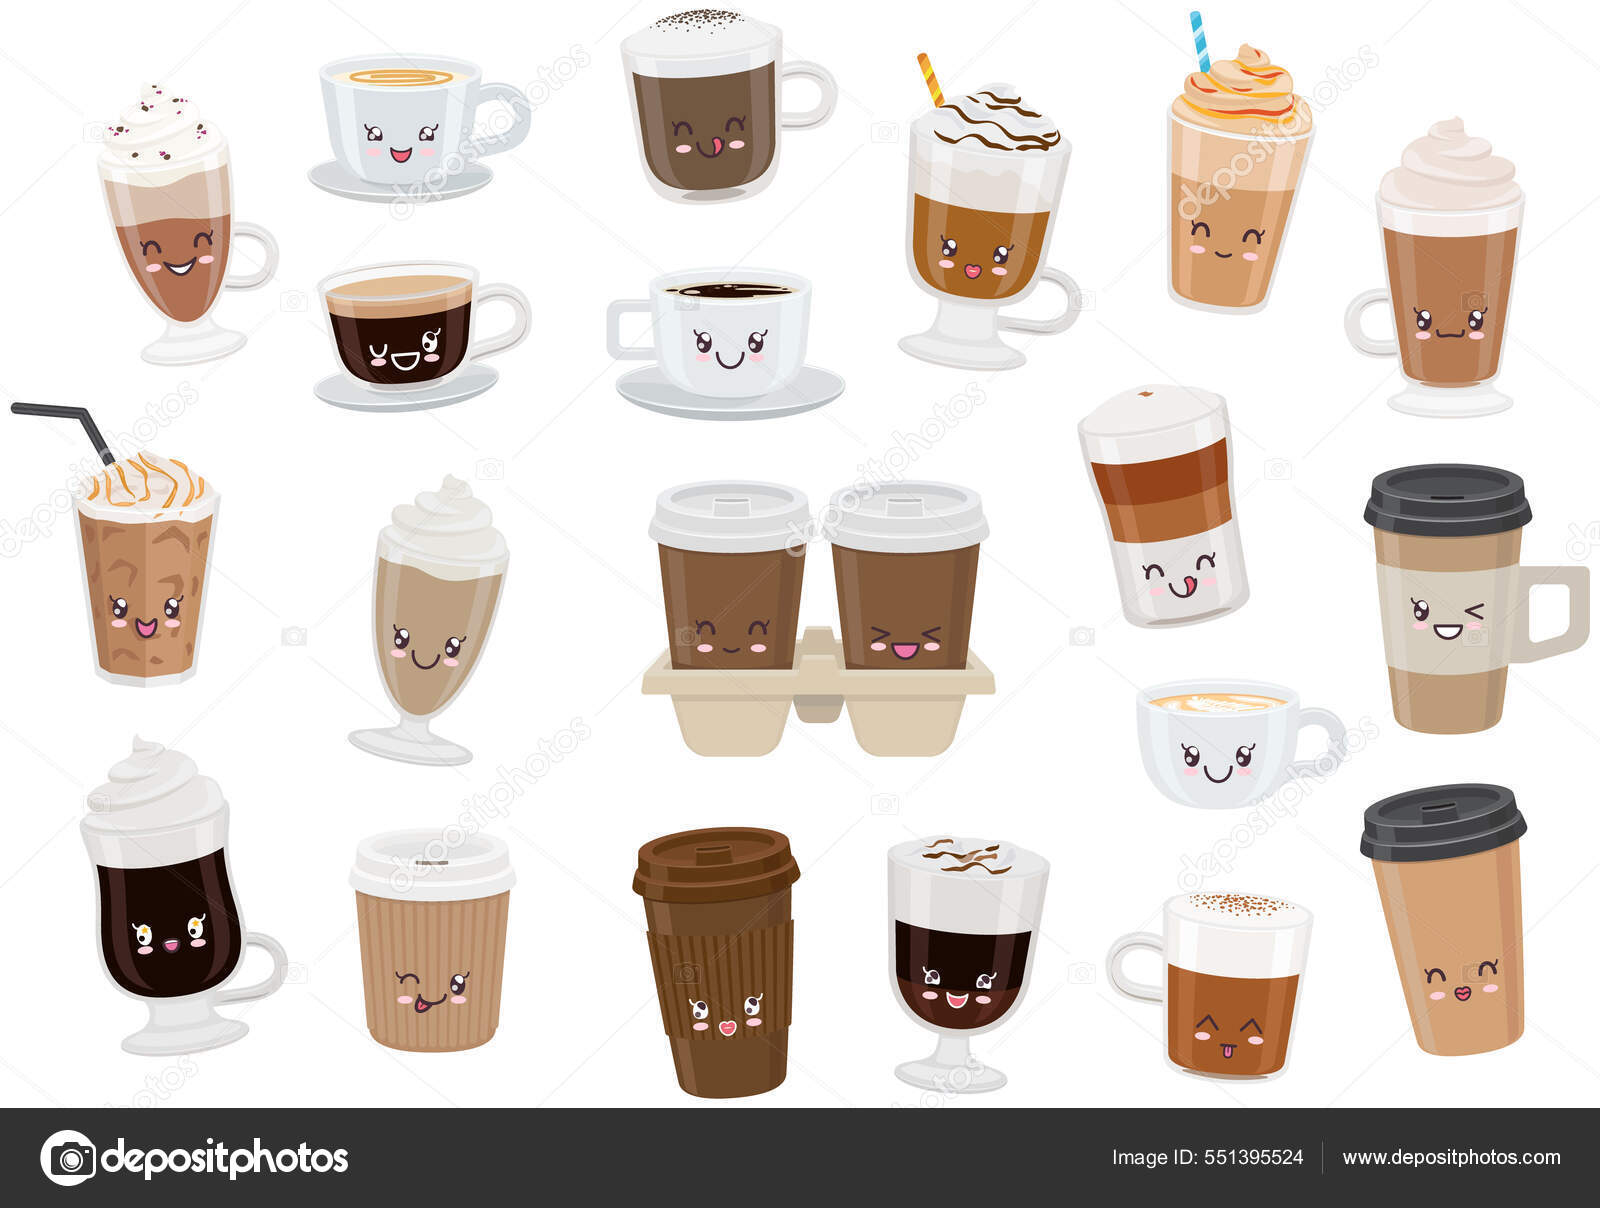 https://st.depositphotos.com/2419757/55139/v/1600/depositphotos_551395524-stock-illustration-cute-cups-of-coffee-set.jpg